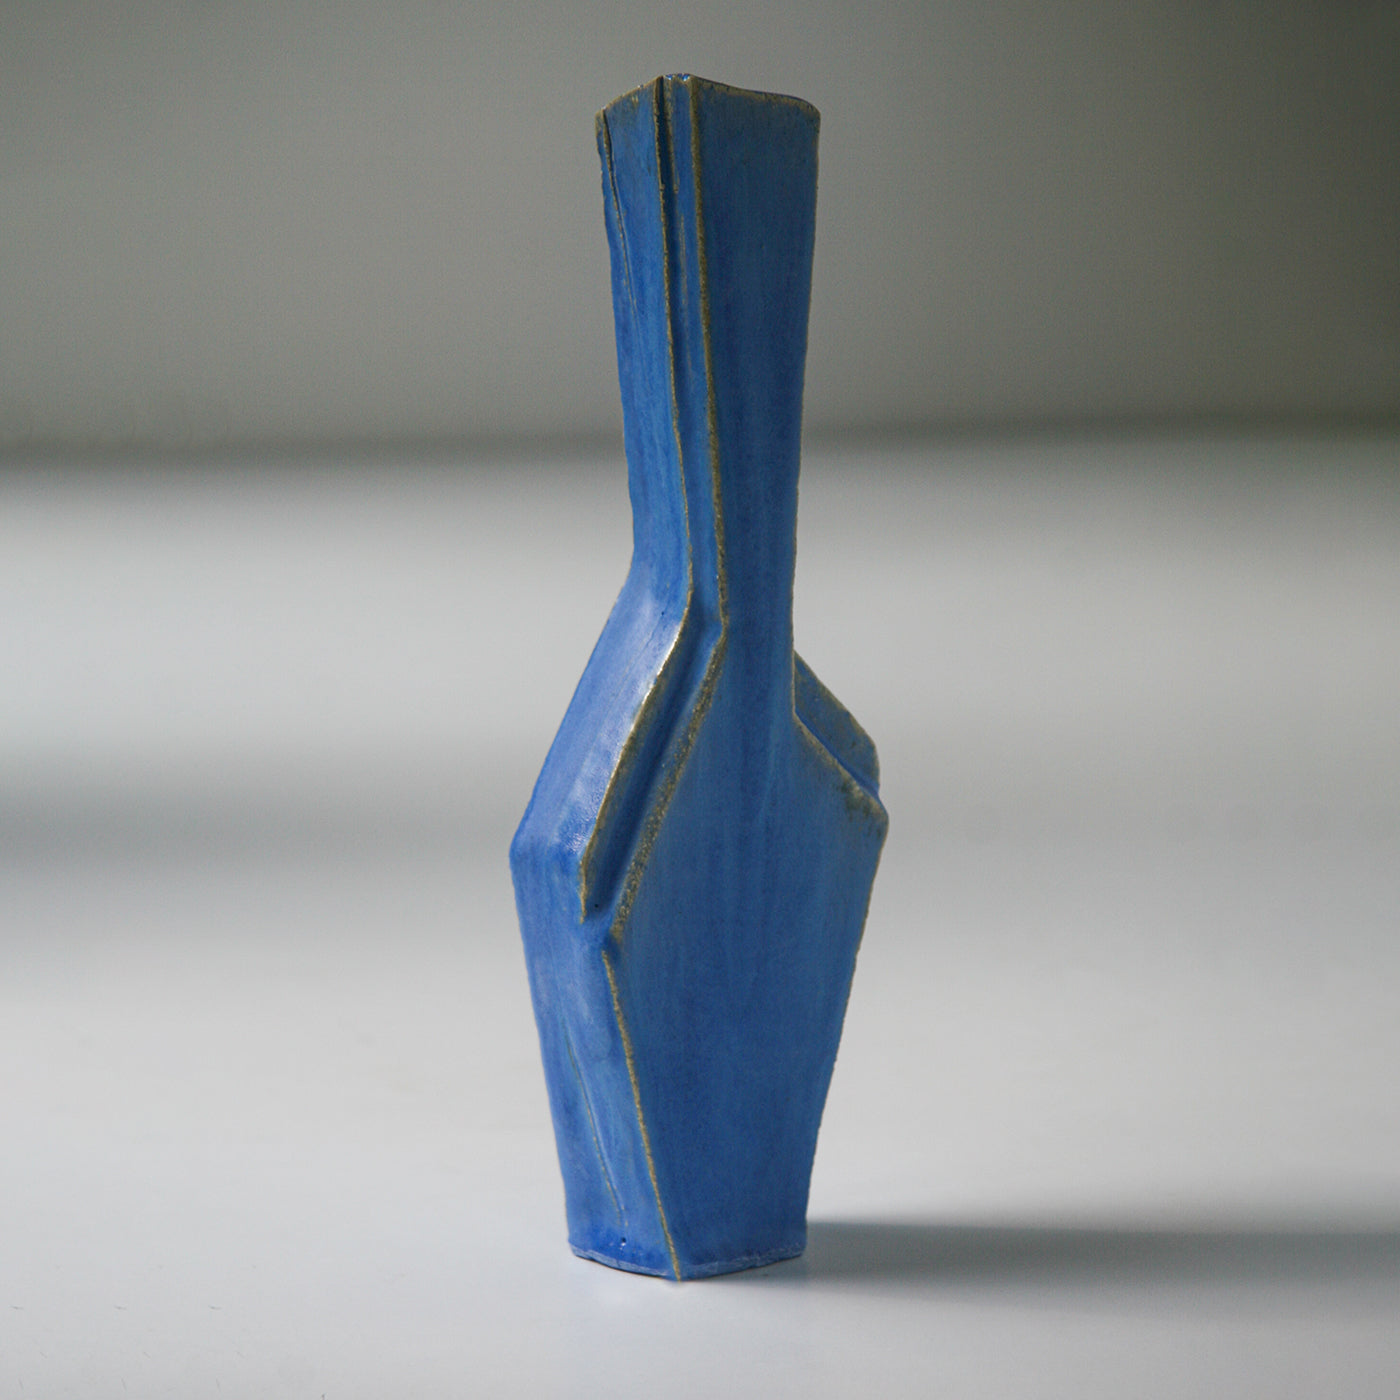 Small Cubist Blue Vase N.2 - Alternative view 1